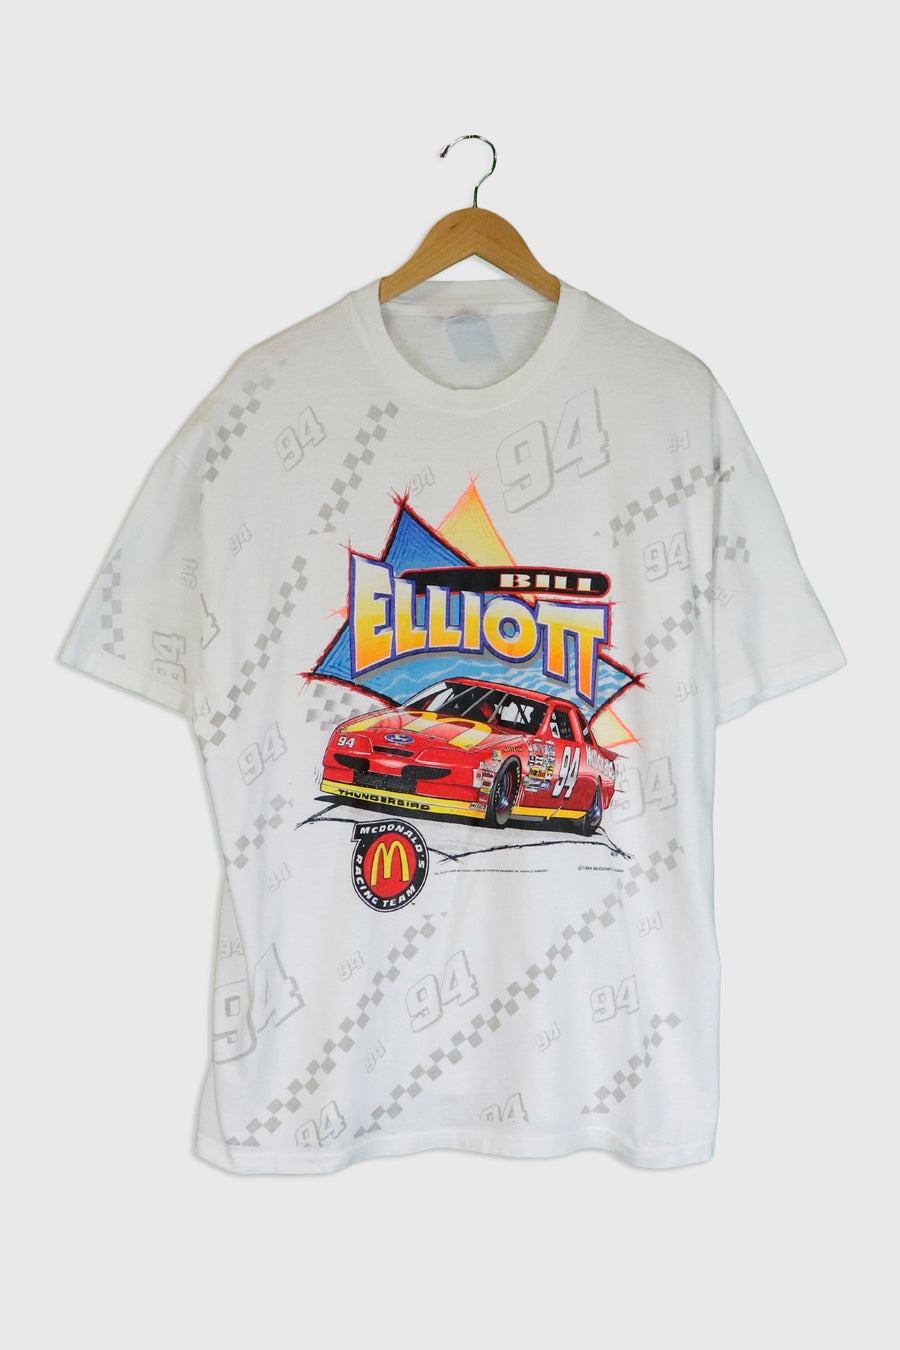 Vintage 1994 Bill Elliot Mcdonalds Racing Team T Shirt Sz XL